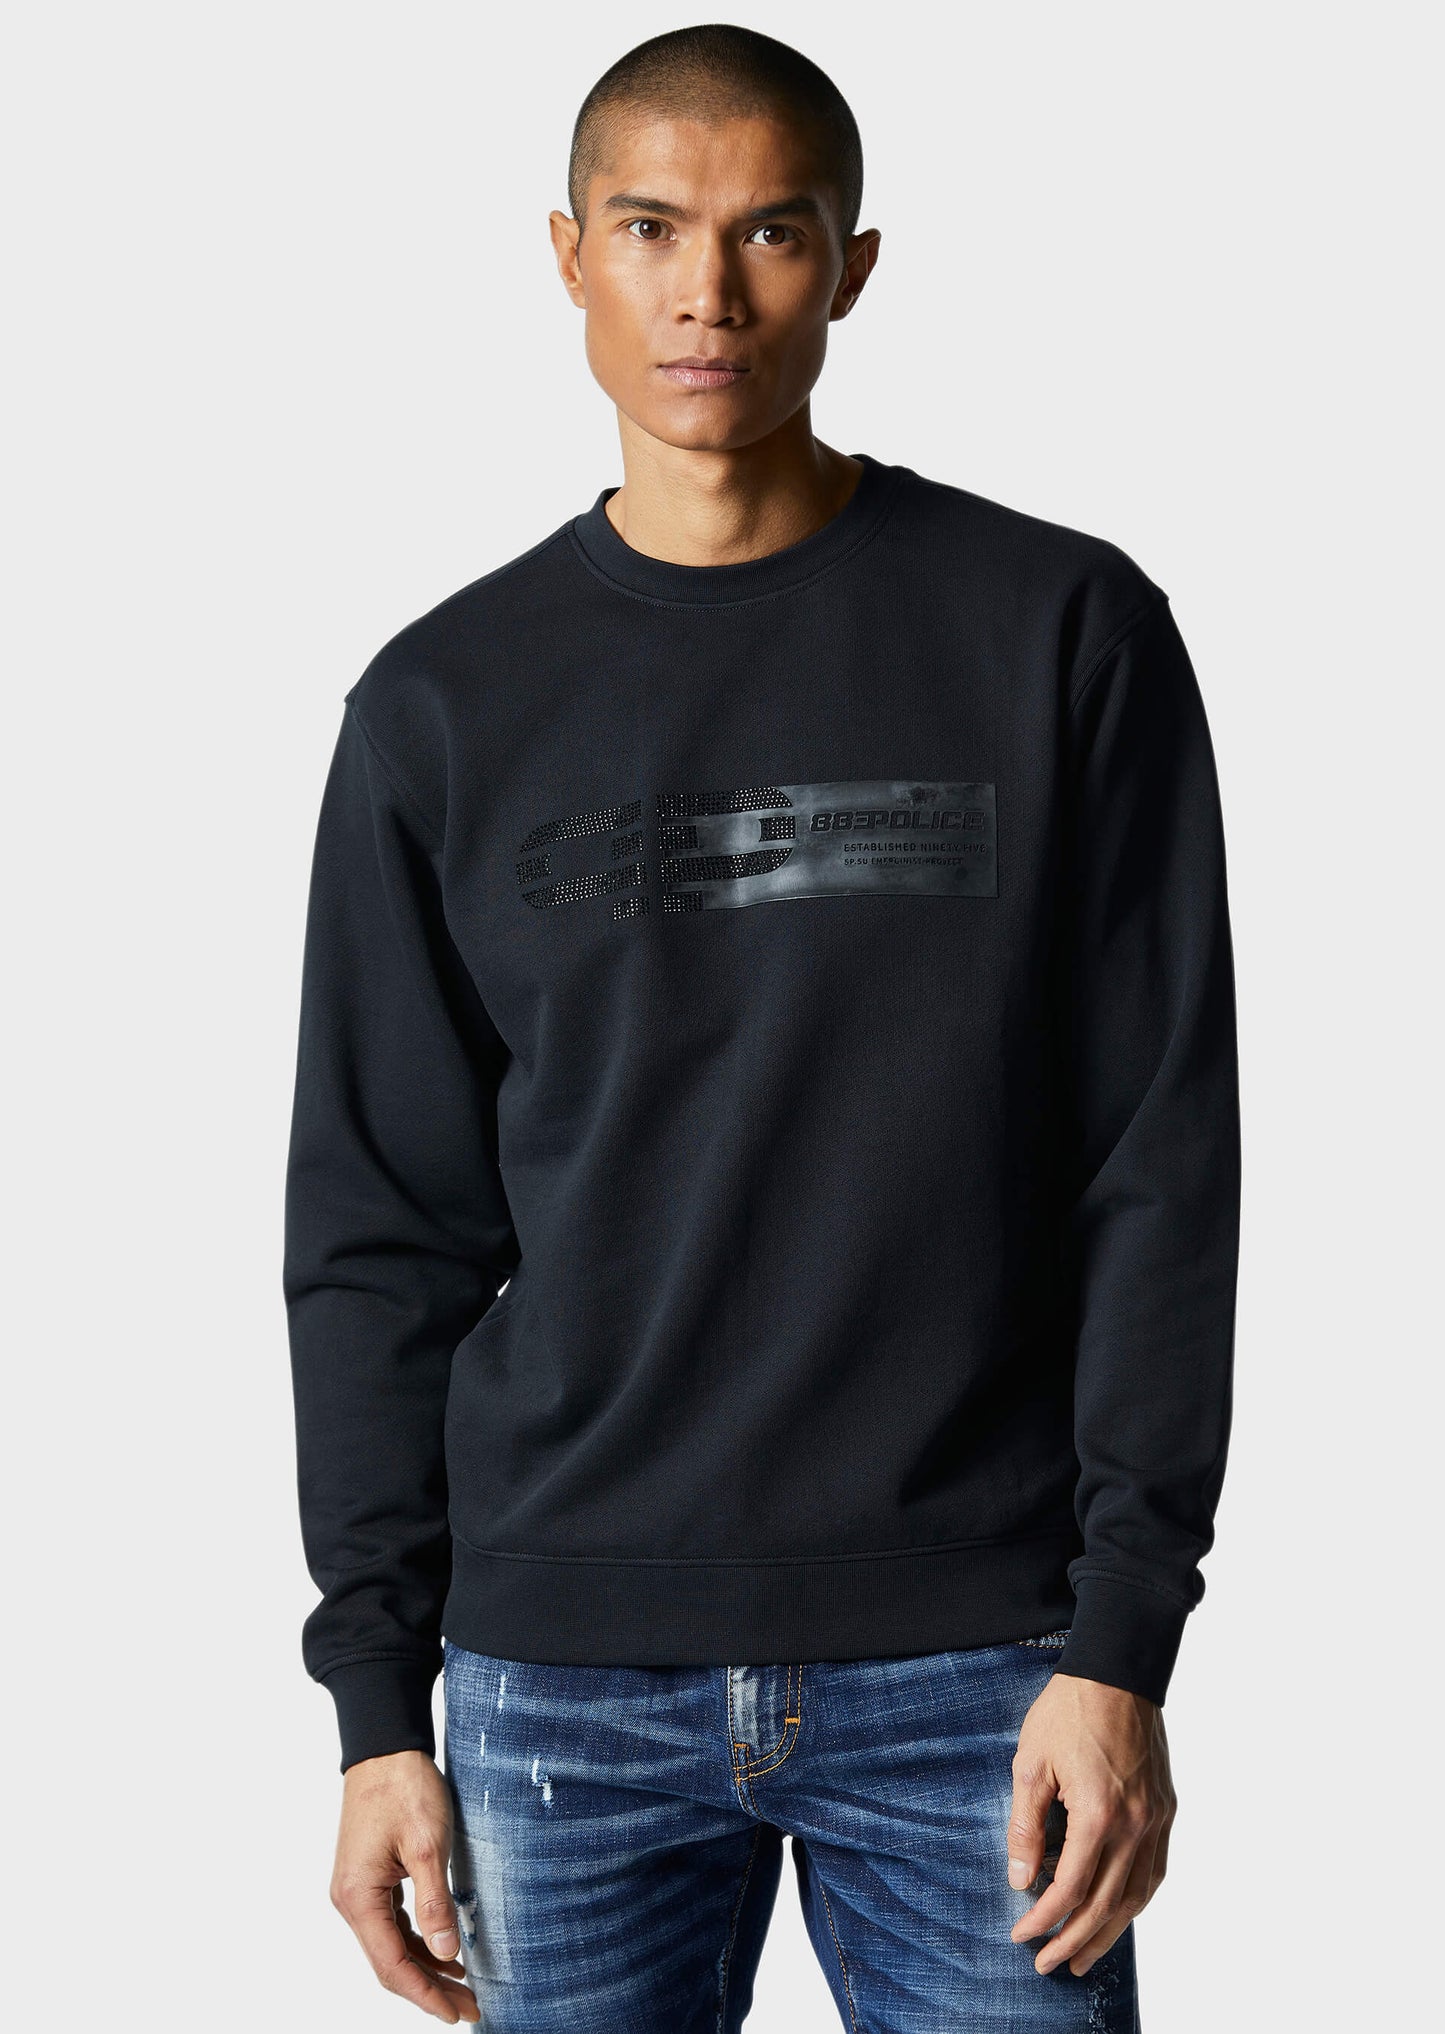 Rundle Black Sweatshirt